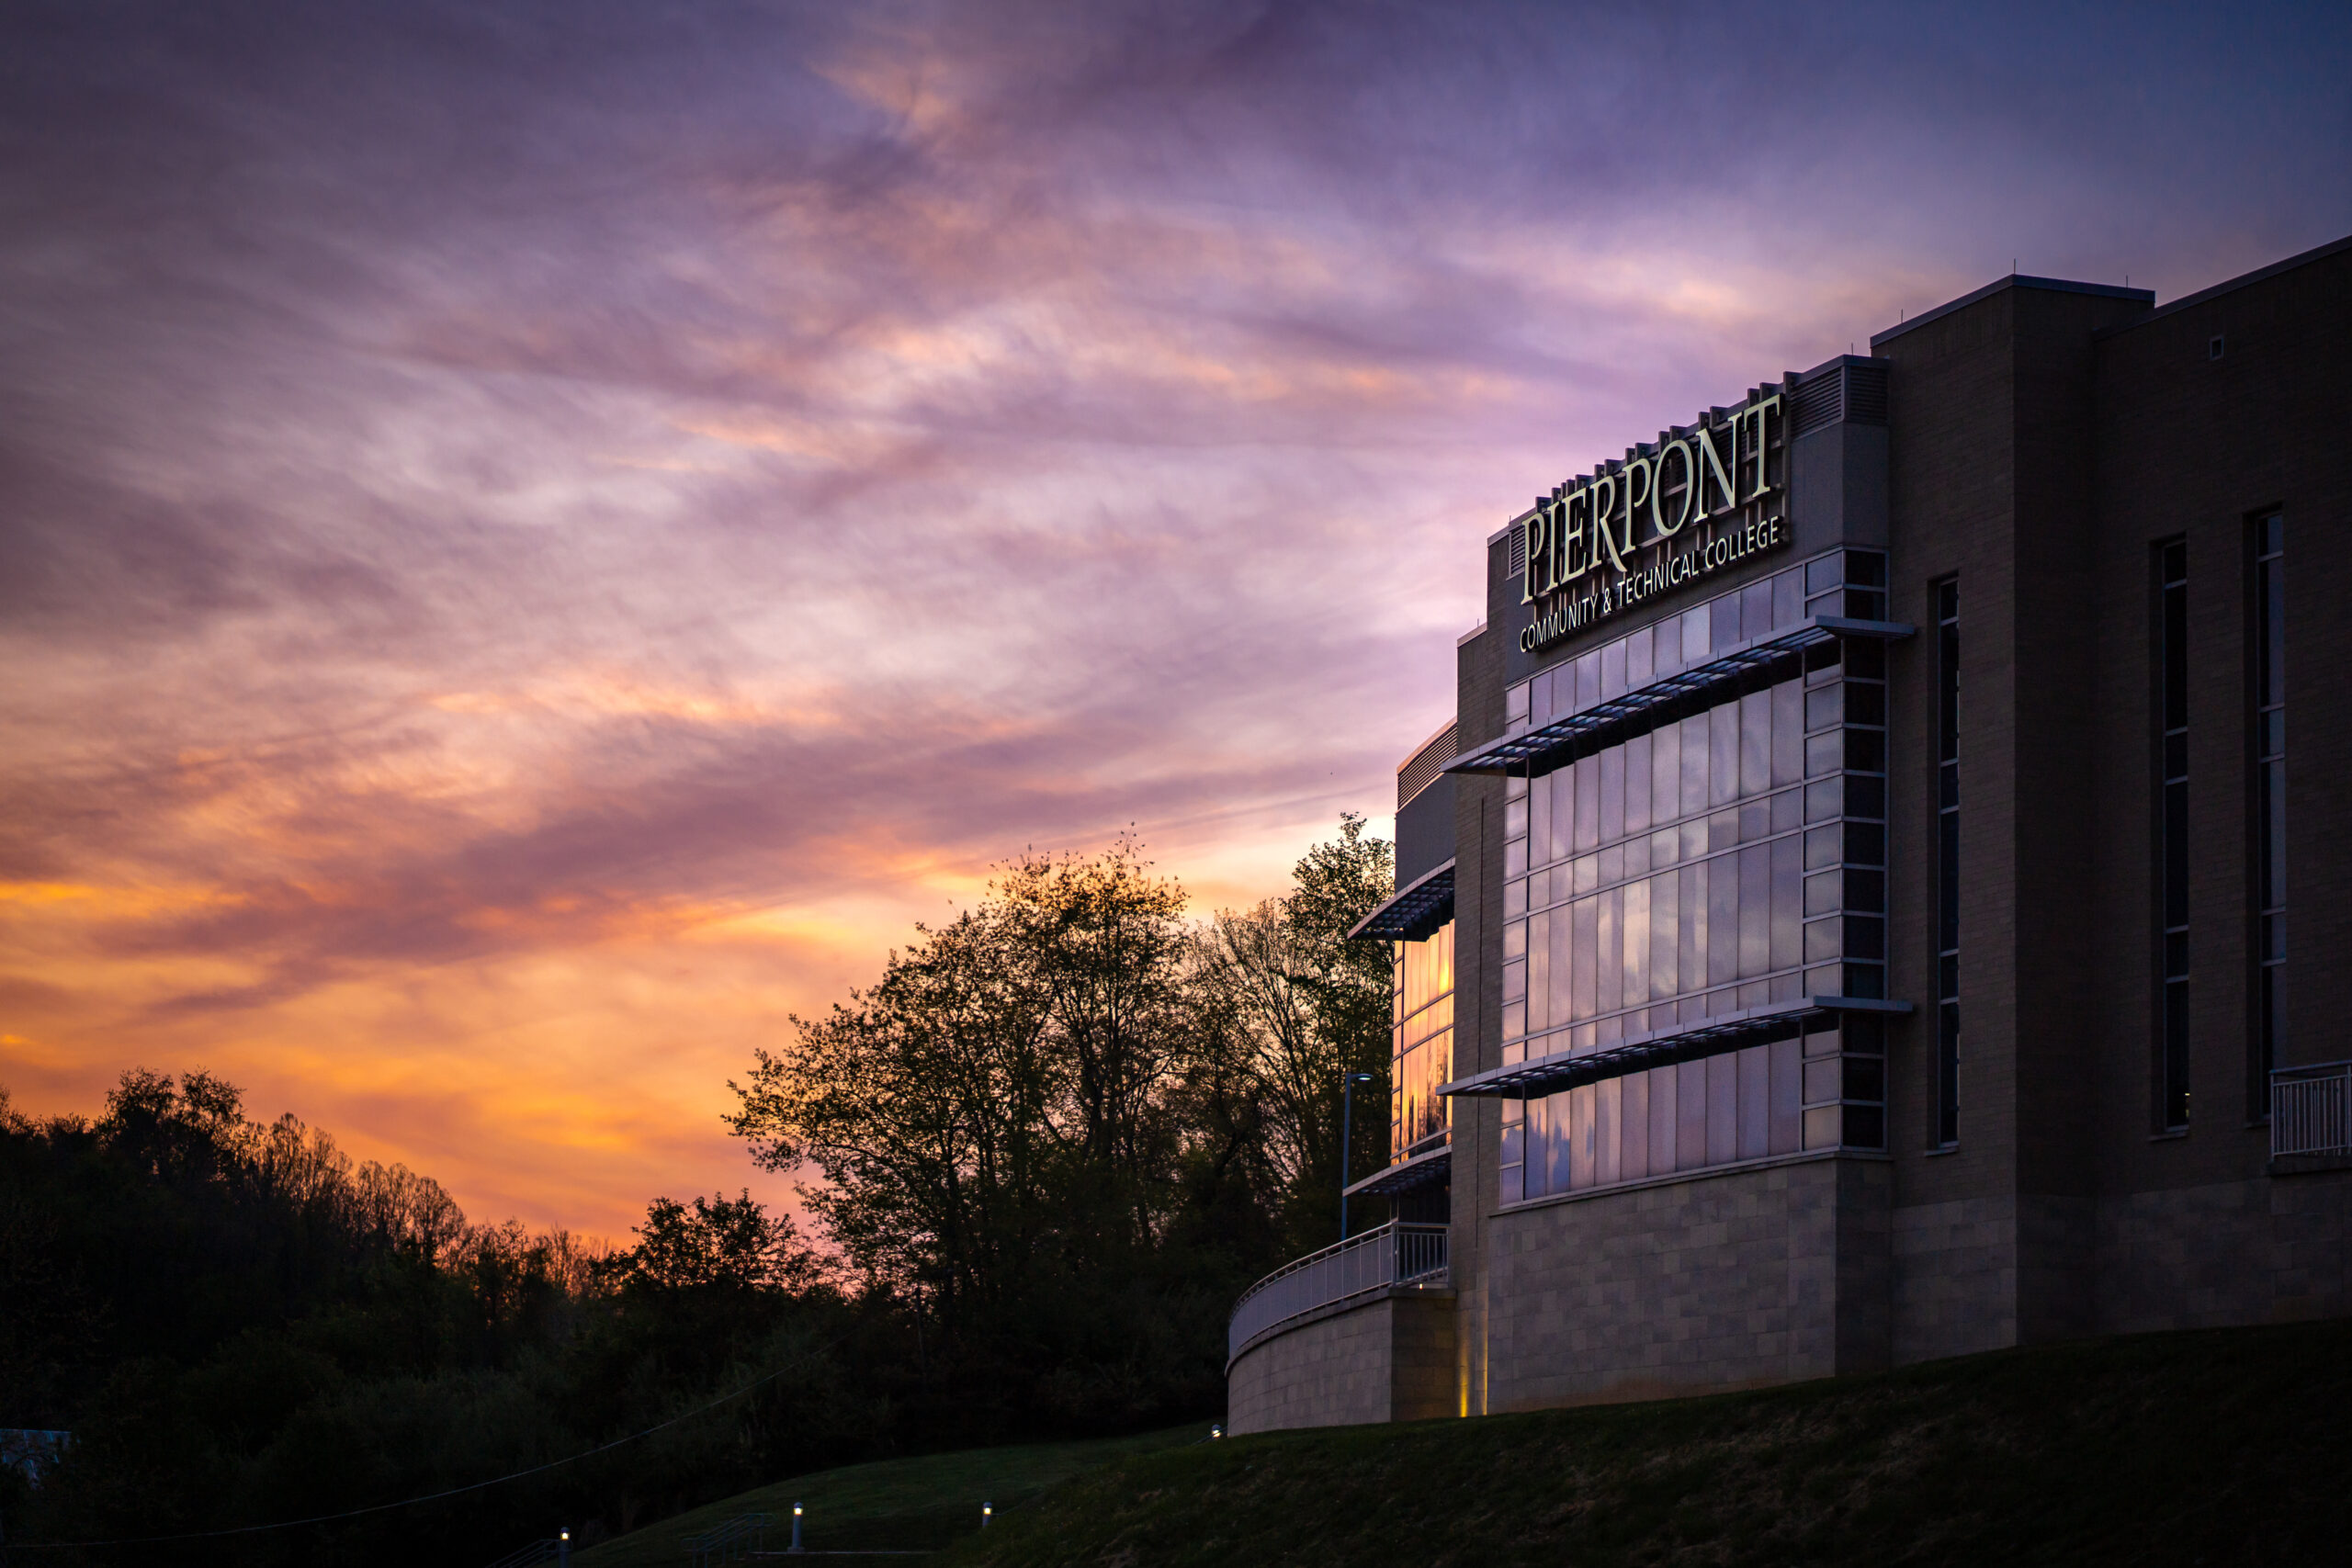 An image of Pierpont's Advanced Technology Center with a sunset.